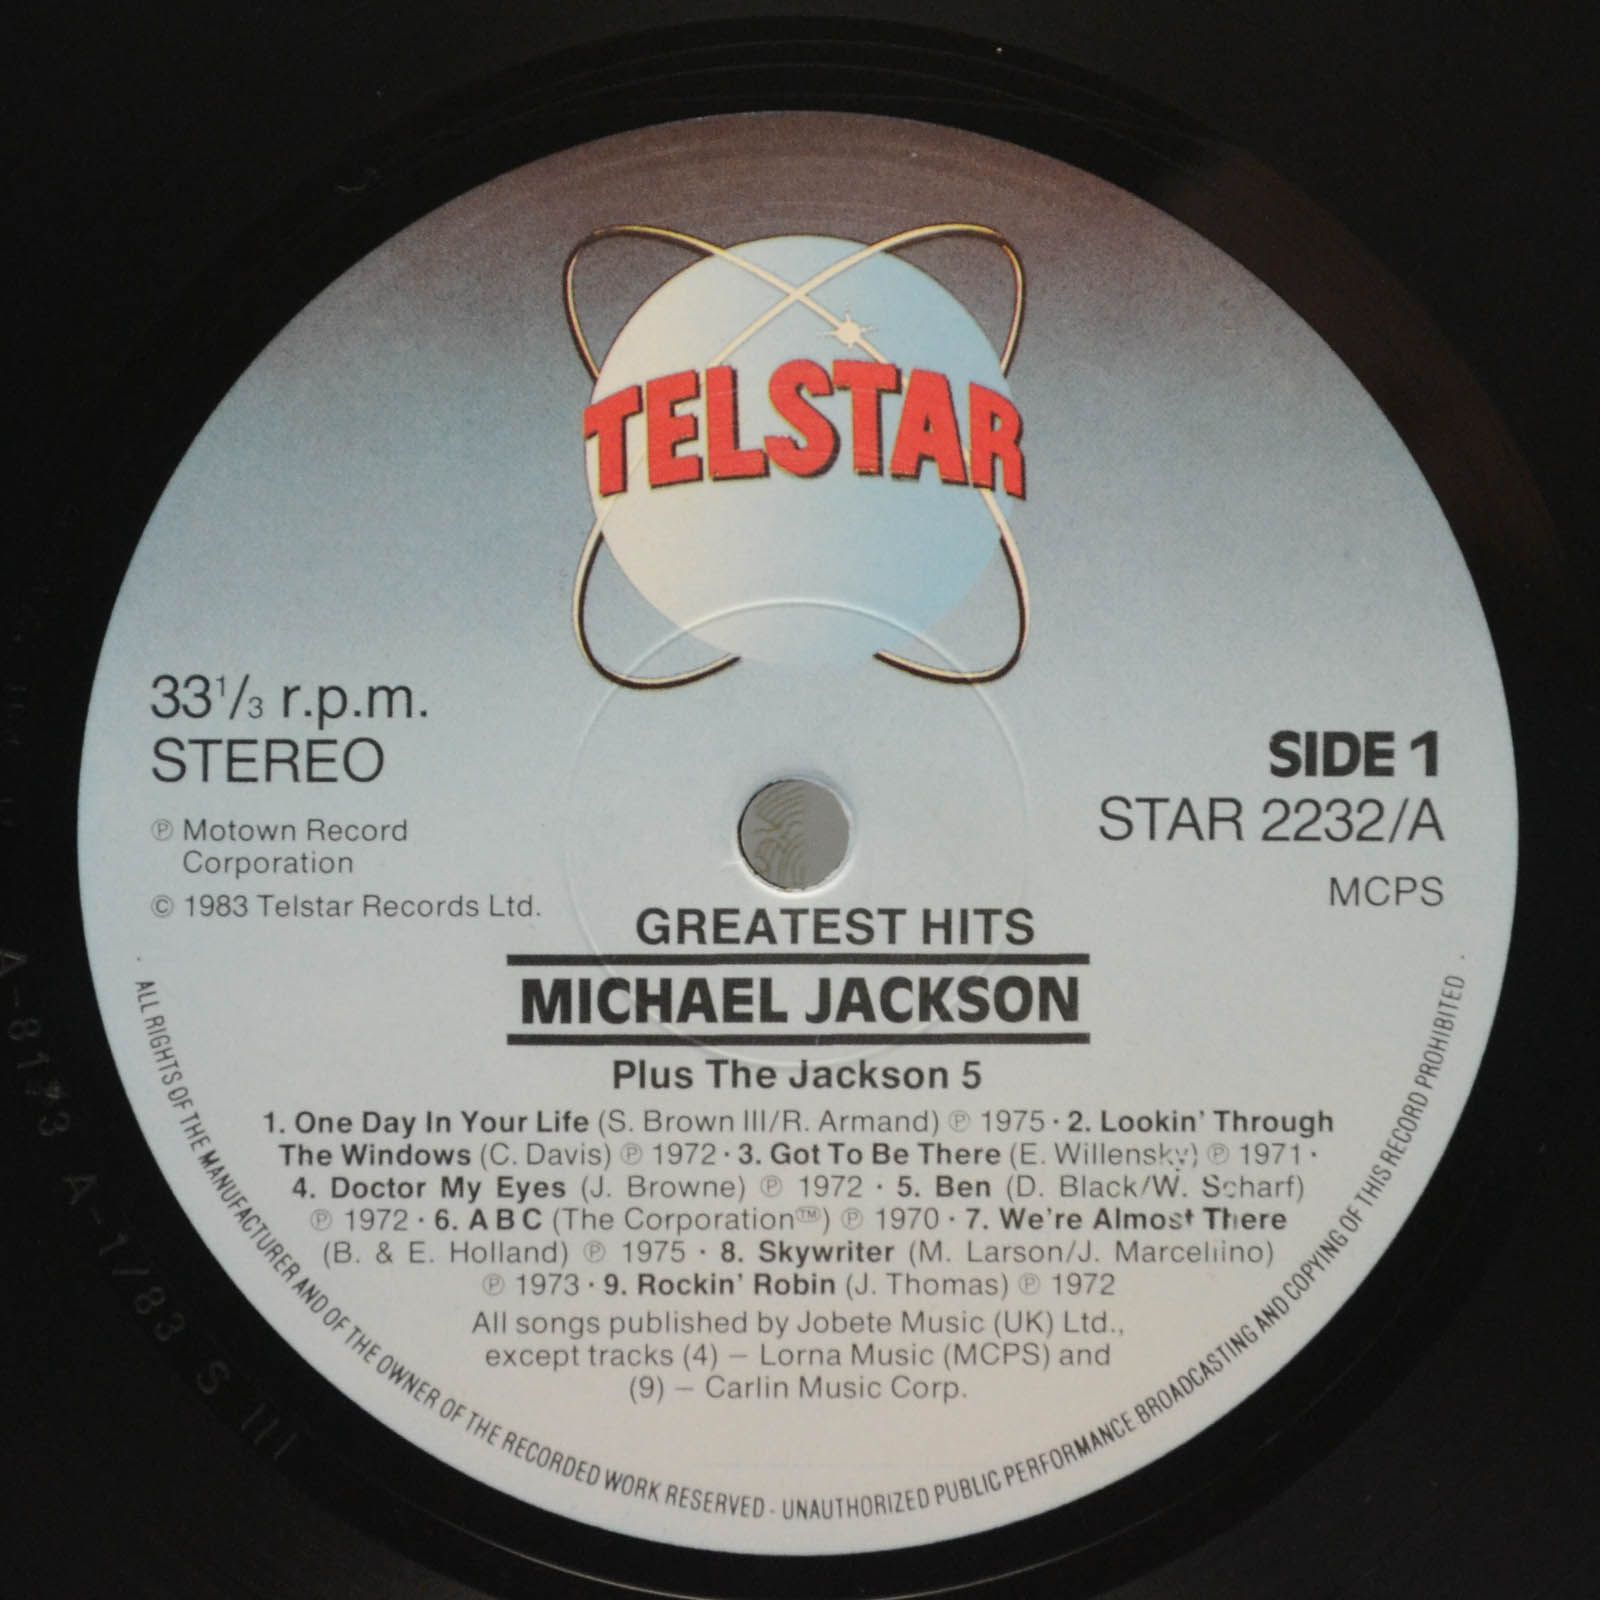 Michael Jackson Plus The Jackson 5 — 18 Greatest Hits (UK), 1983